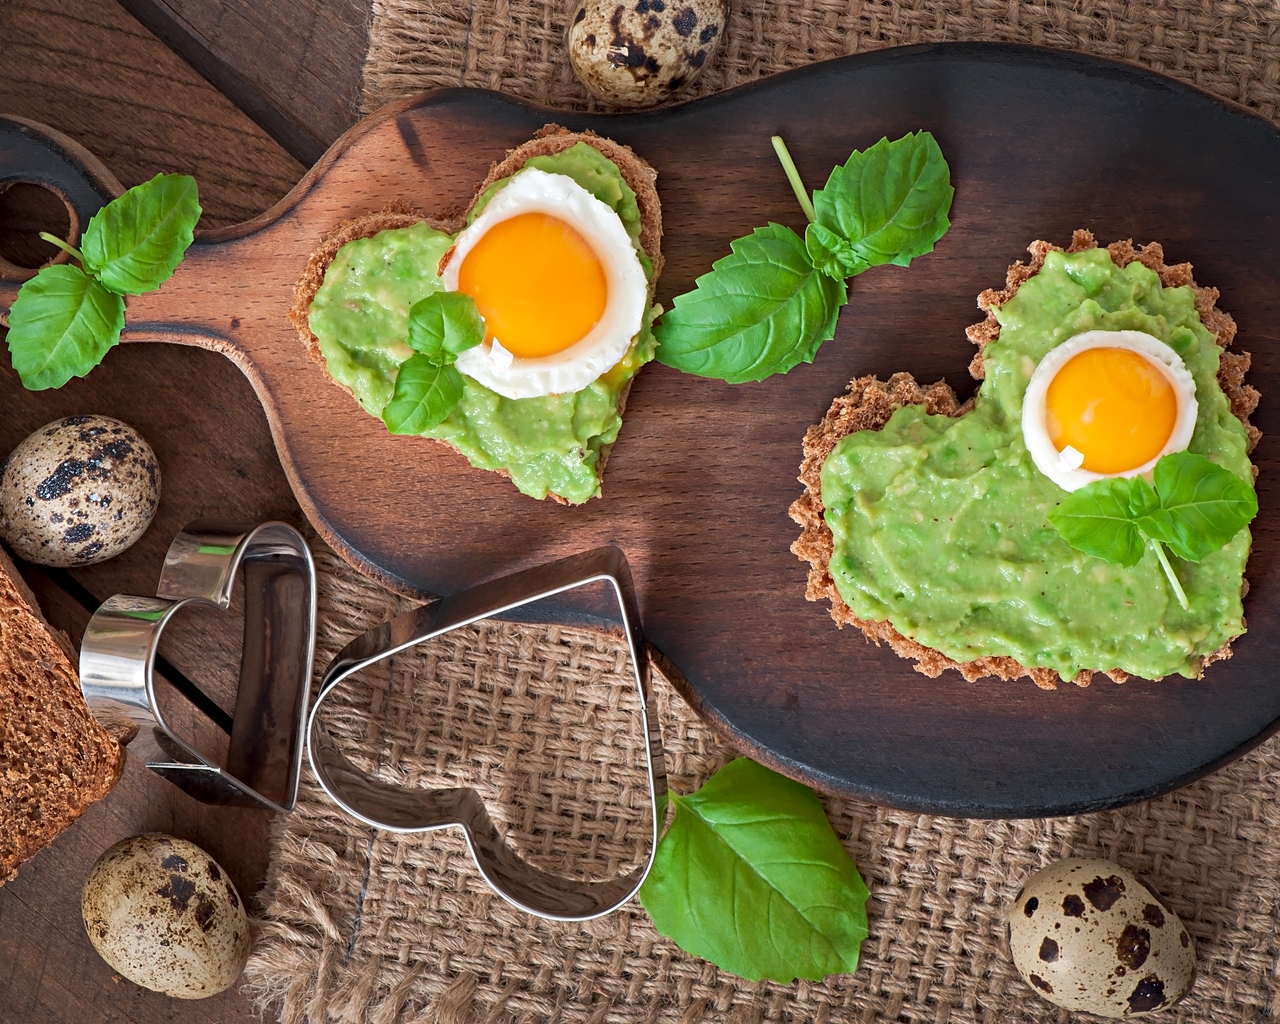 Картинка: Завтрак, яичница, форма, яйца, сердечки, зелень